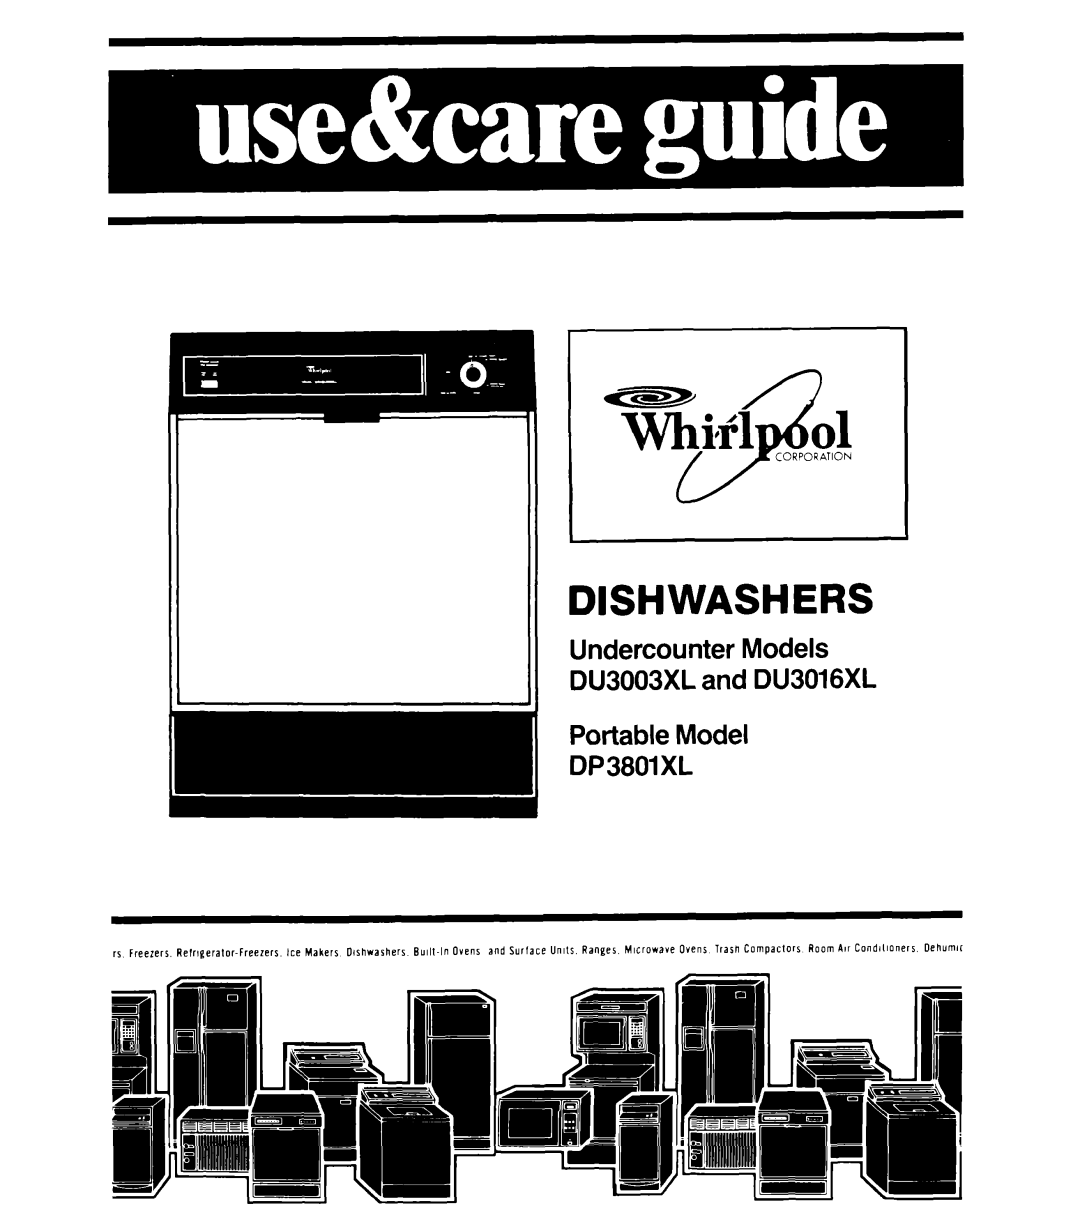 Whirlpool manual Dishwashers, Undercounter Models DU3003XL and DU3016XL, Portable Model DP3801XL 